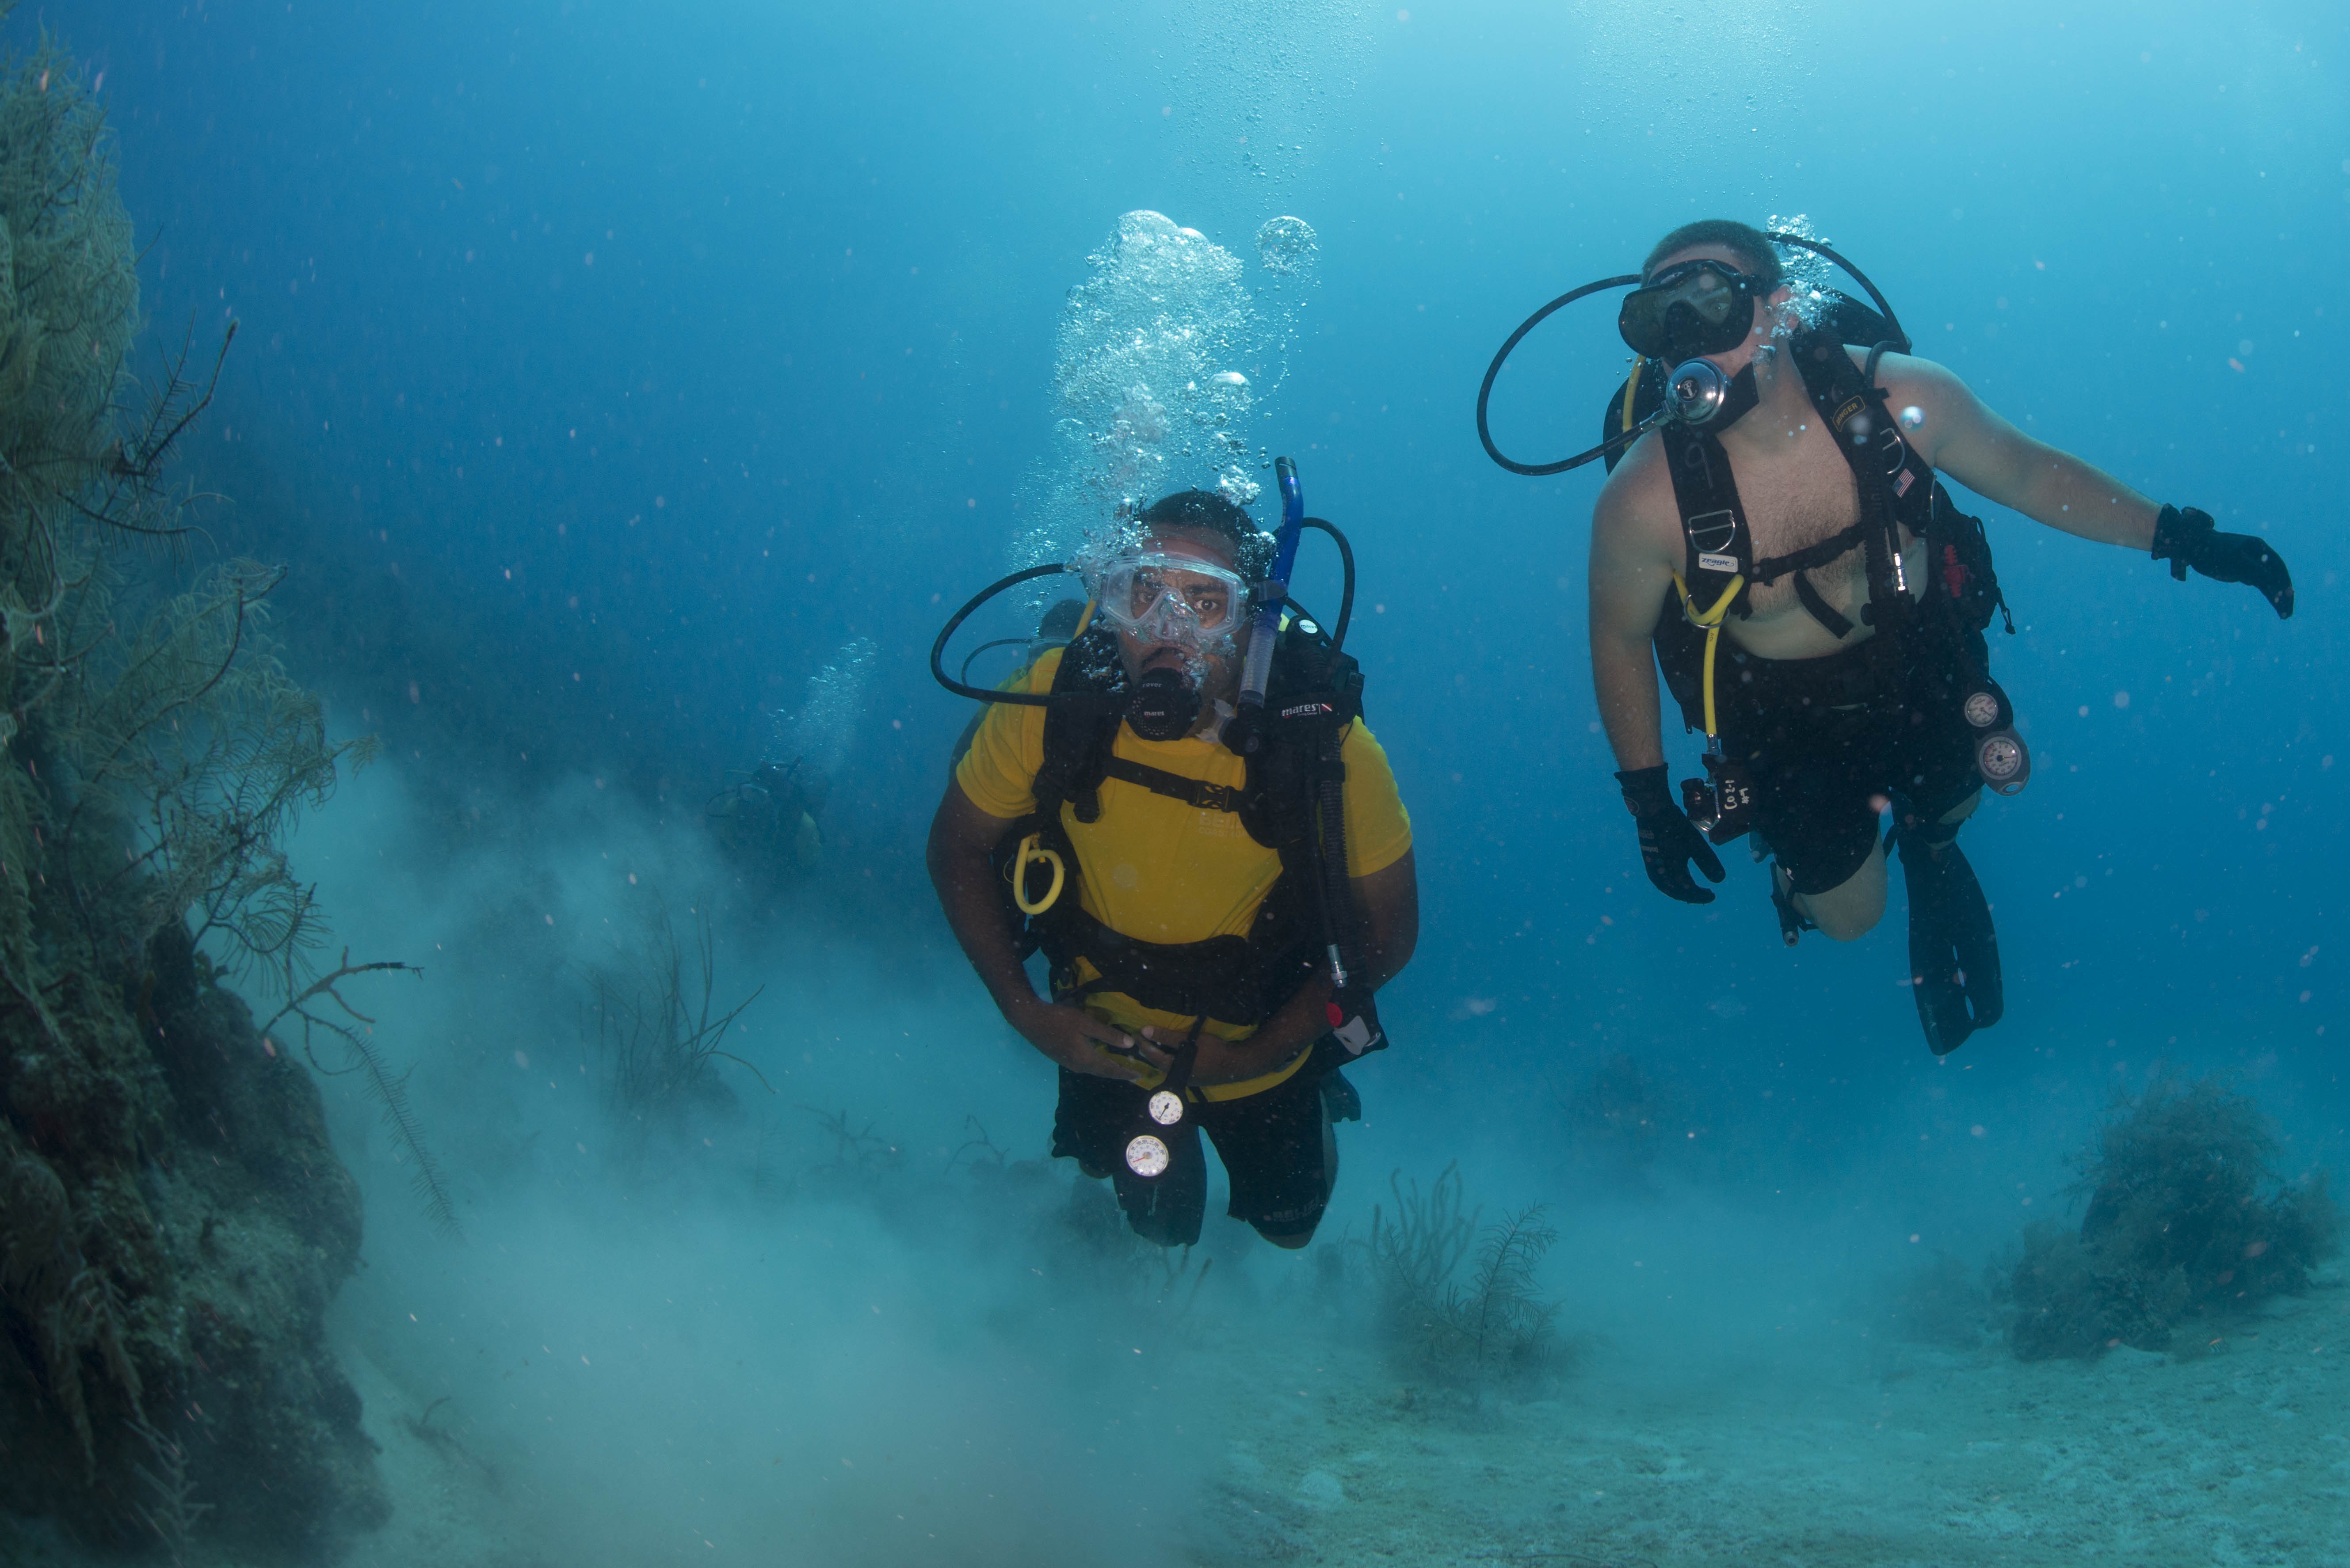 Scuba divers in the ocean photo